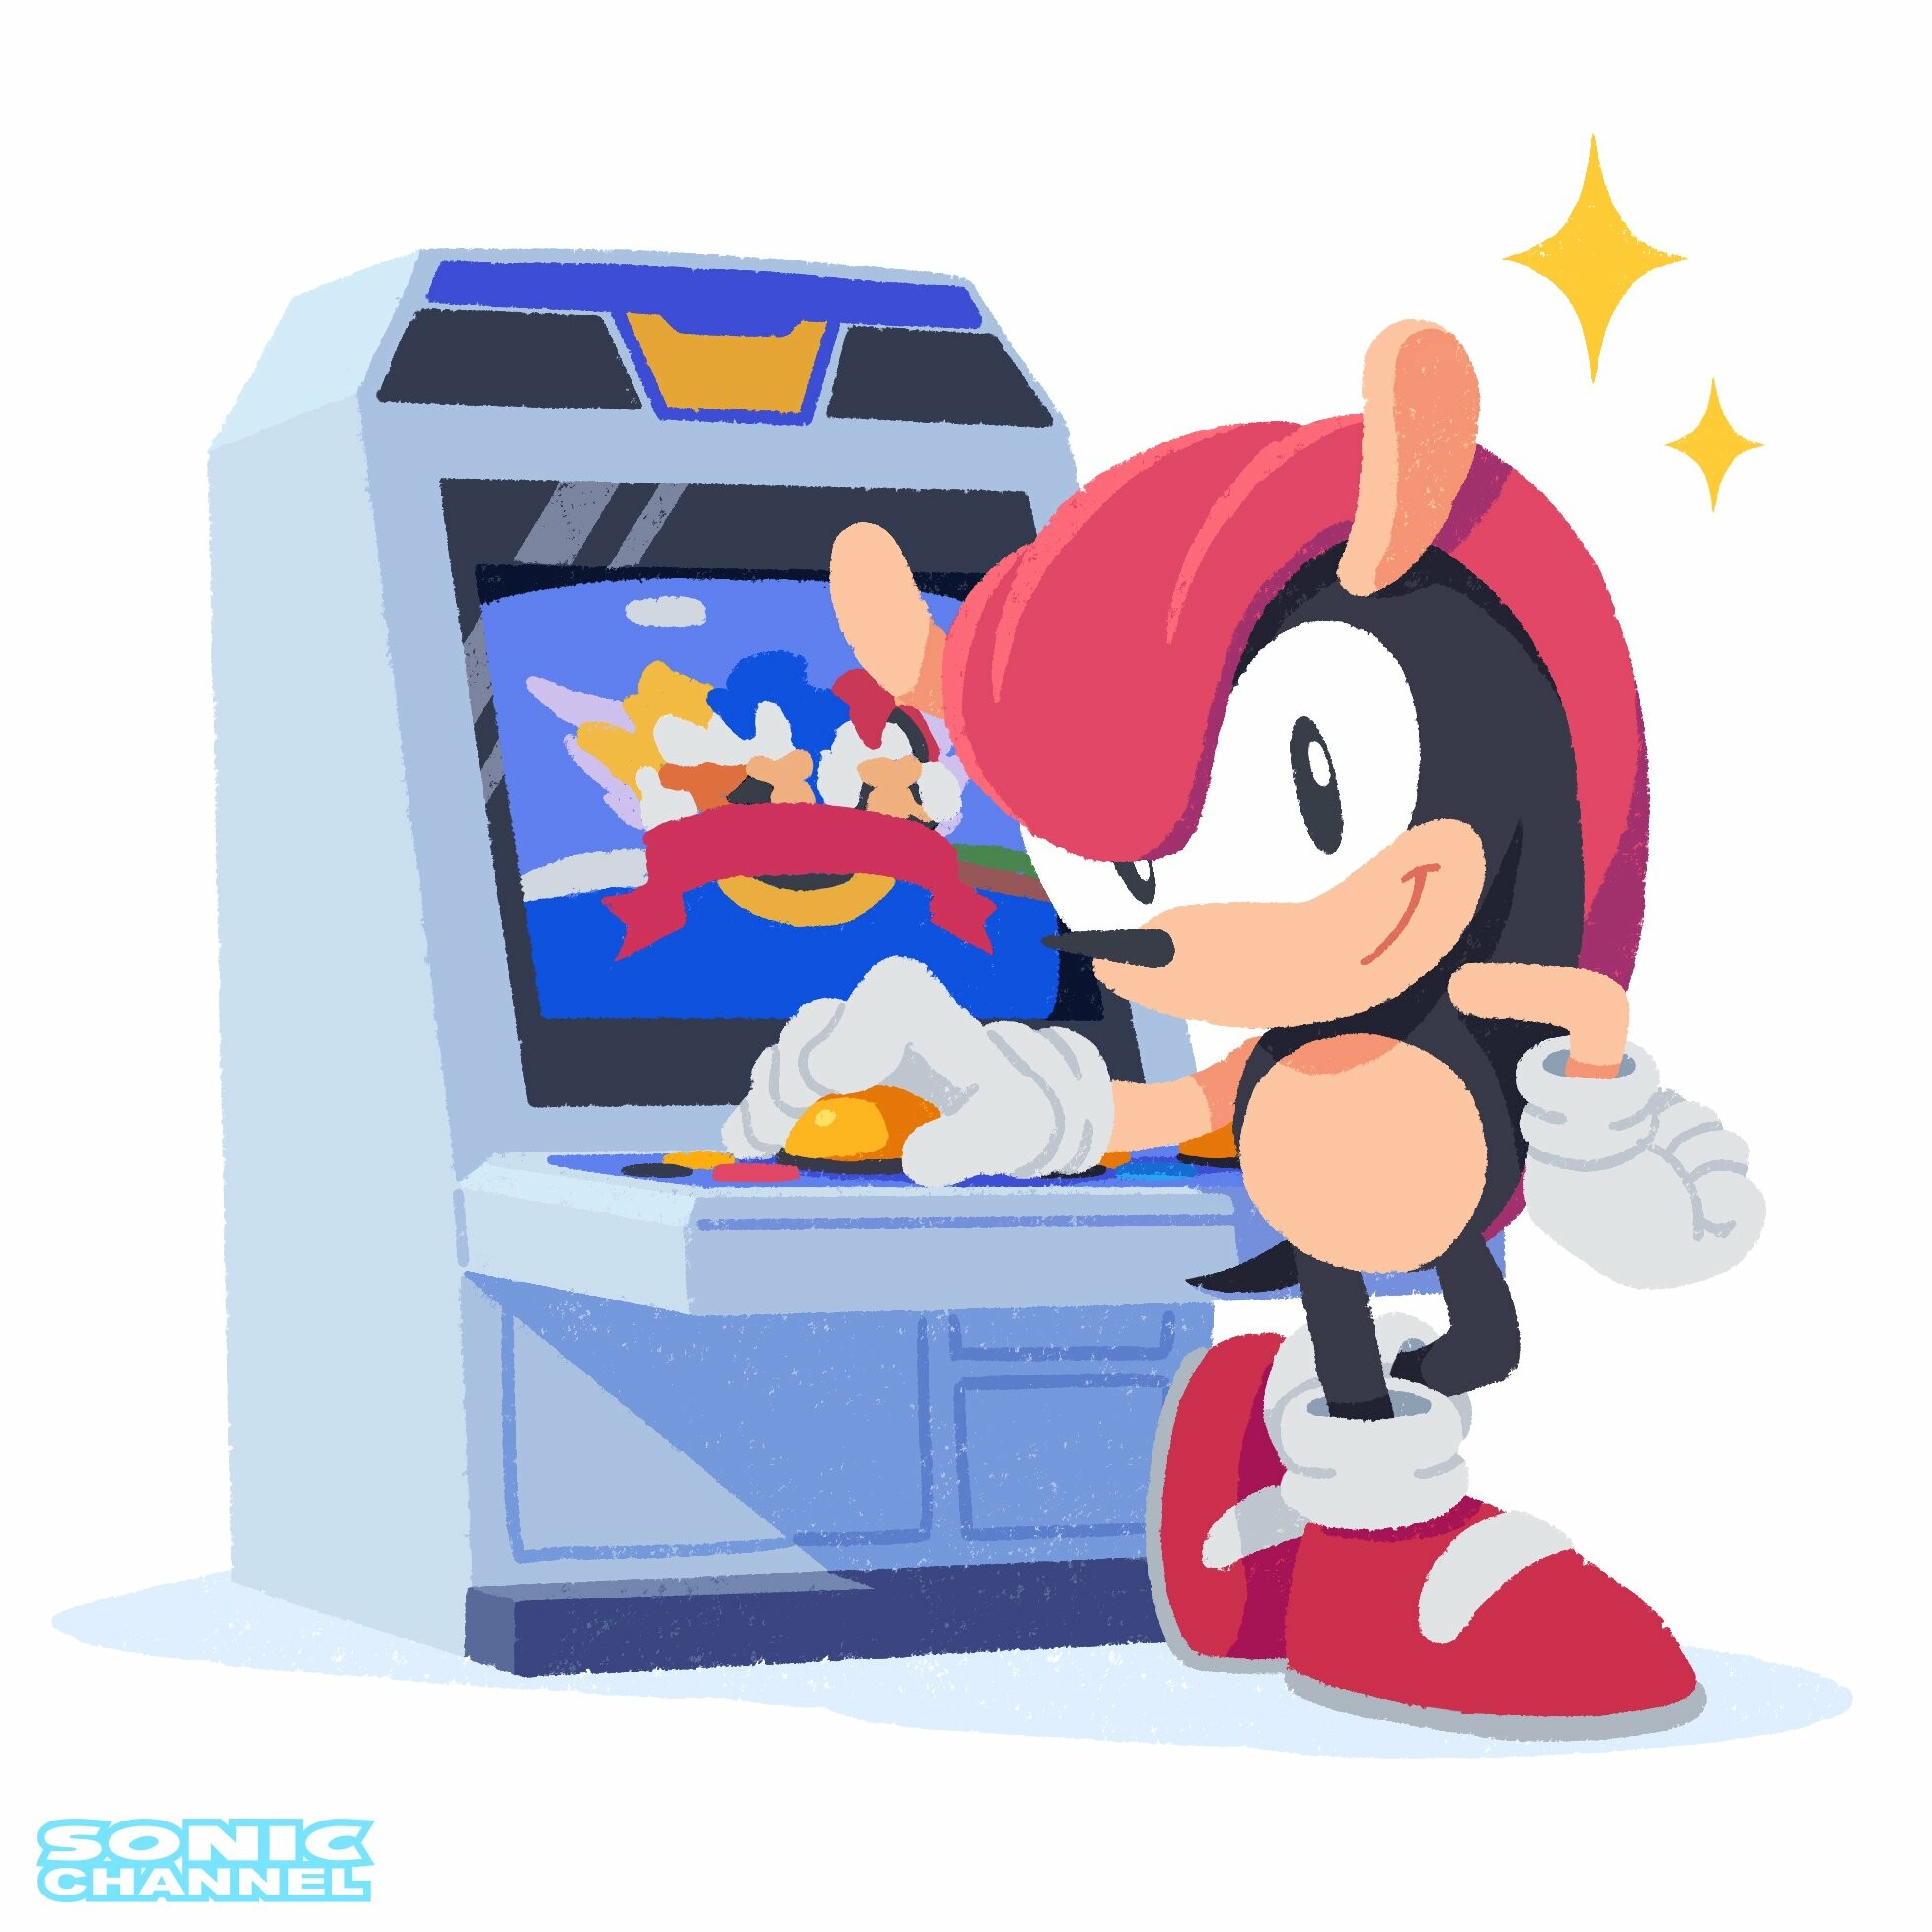 Mighty the Armadillo in Sonic the Hedgehog Sega Genesis Game